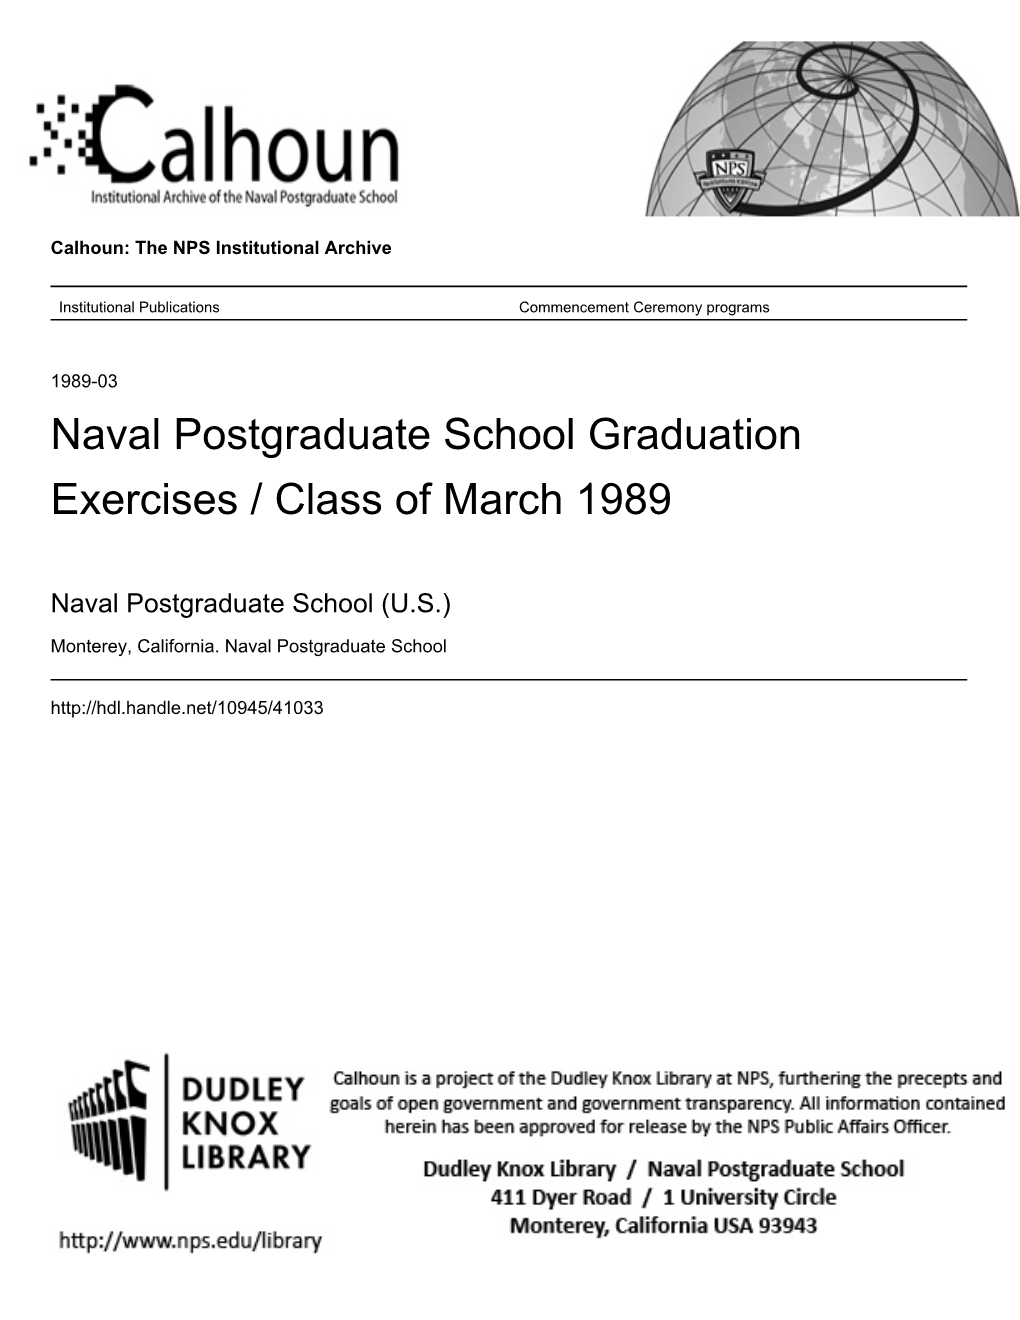 Naval Postgraduate School Graduation Exercises / Class of March 1989